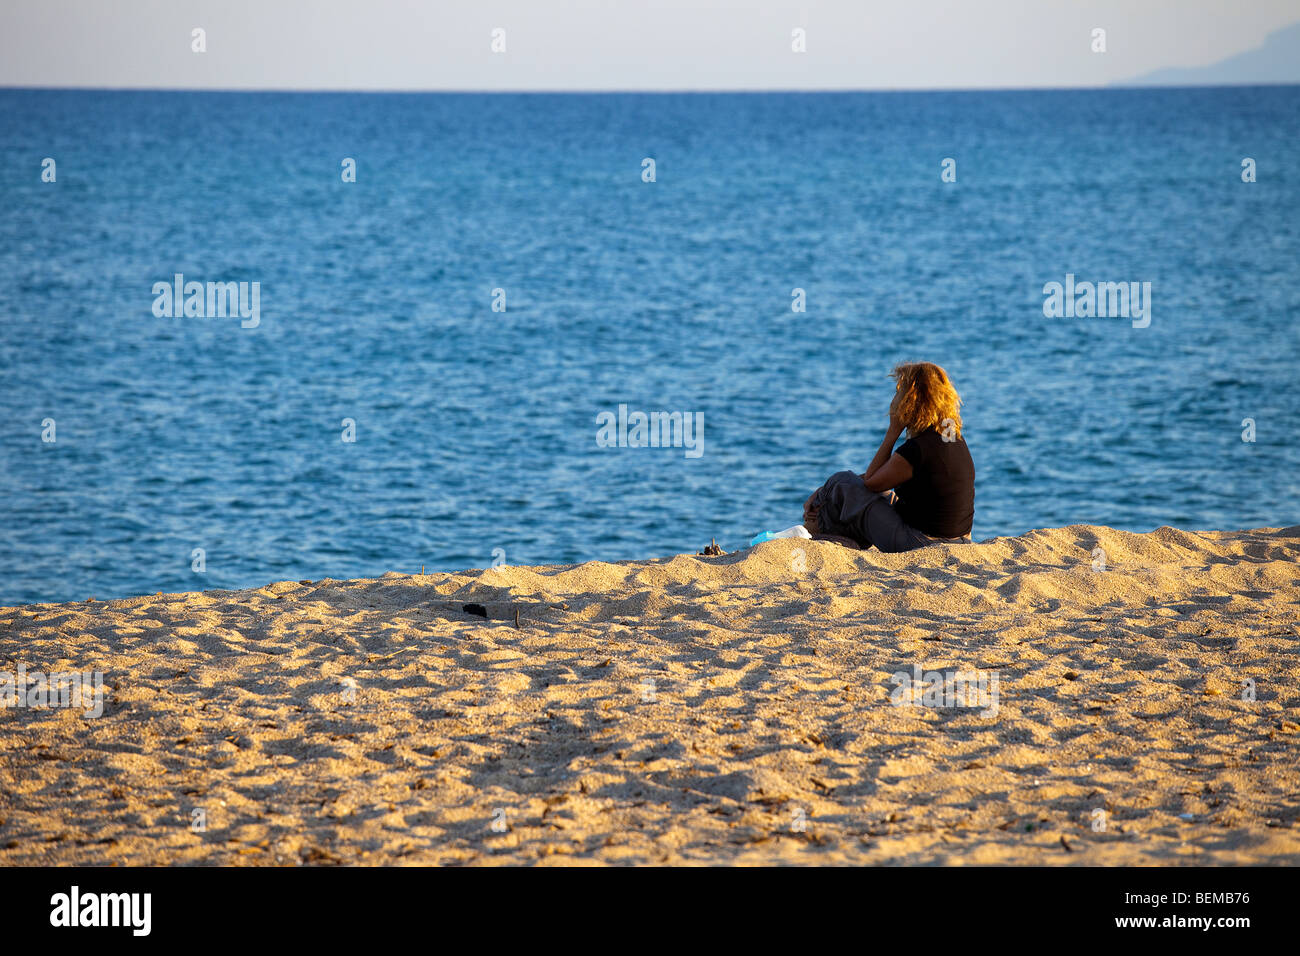 San Teodoro beach at the sunset with people. Sardinia, Italy. Woman on the beach Stock Photo